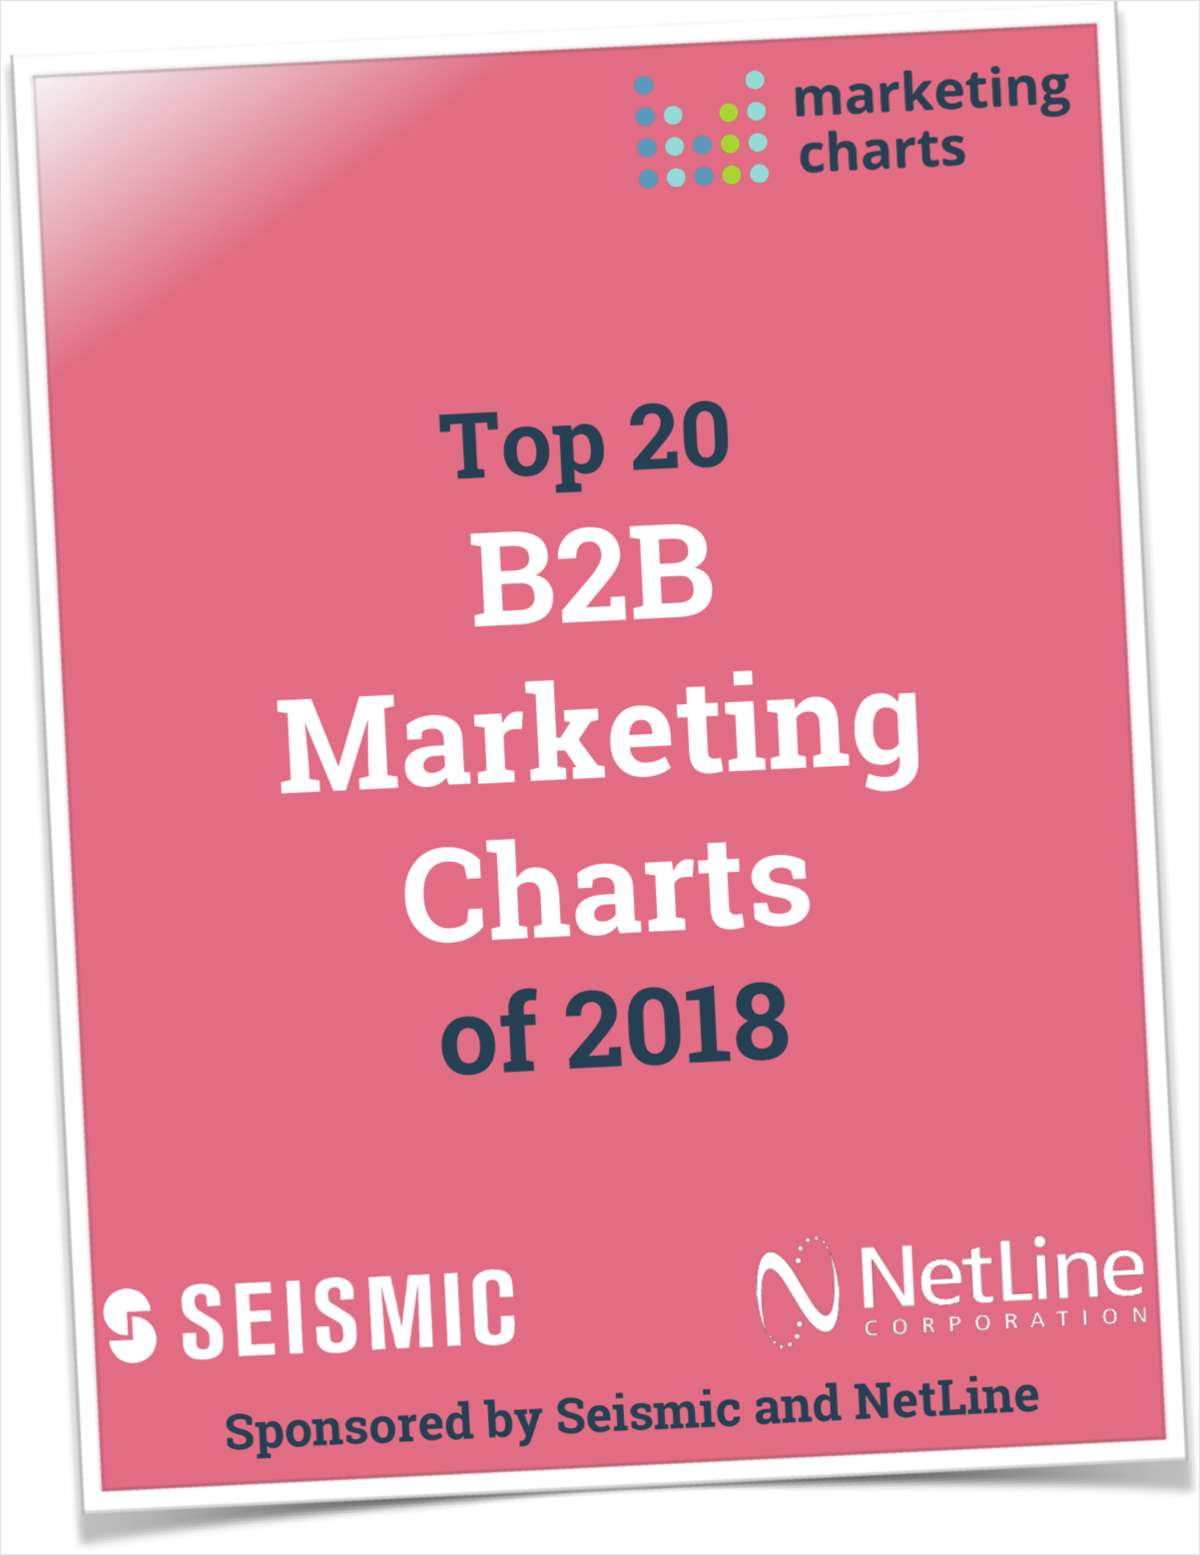 Top 20 B2B Marketing Charts of 2018